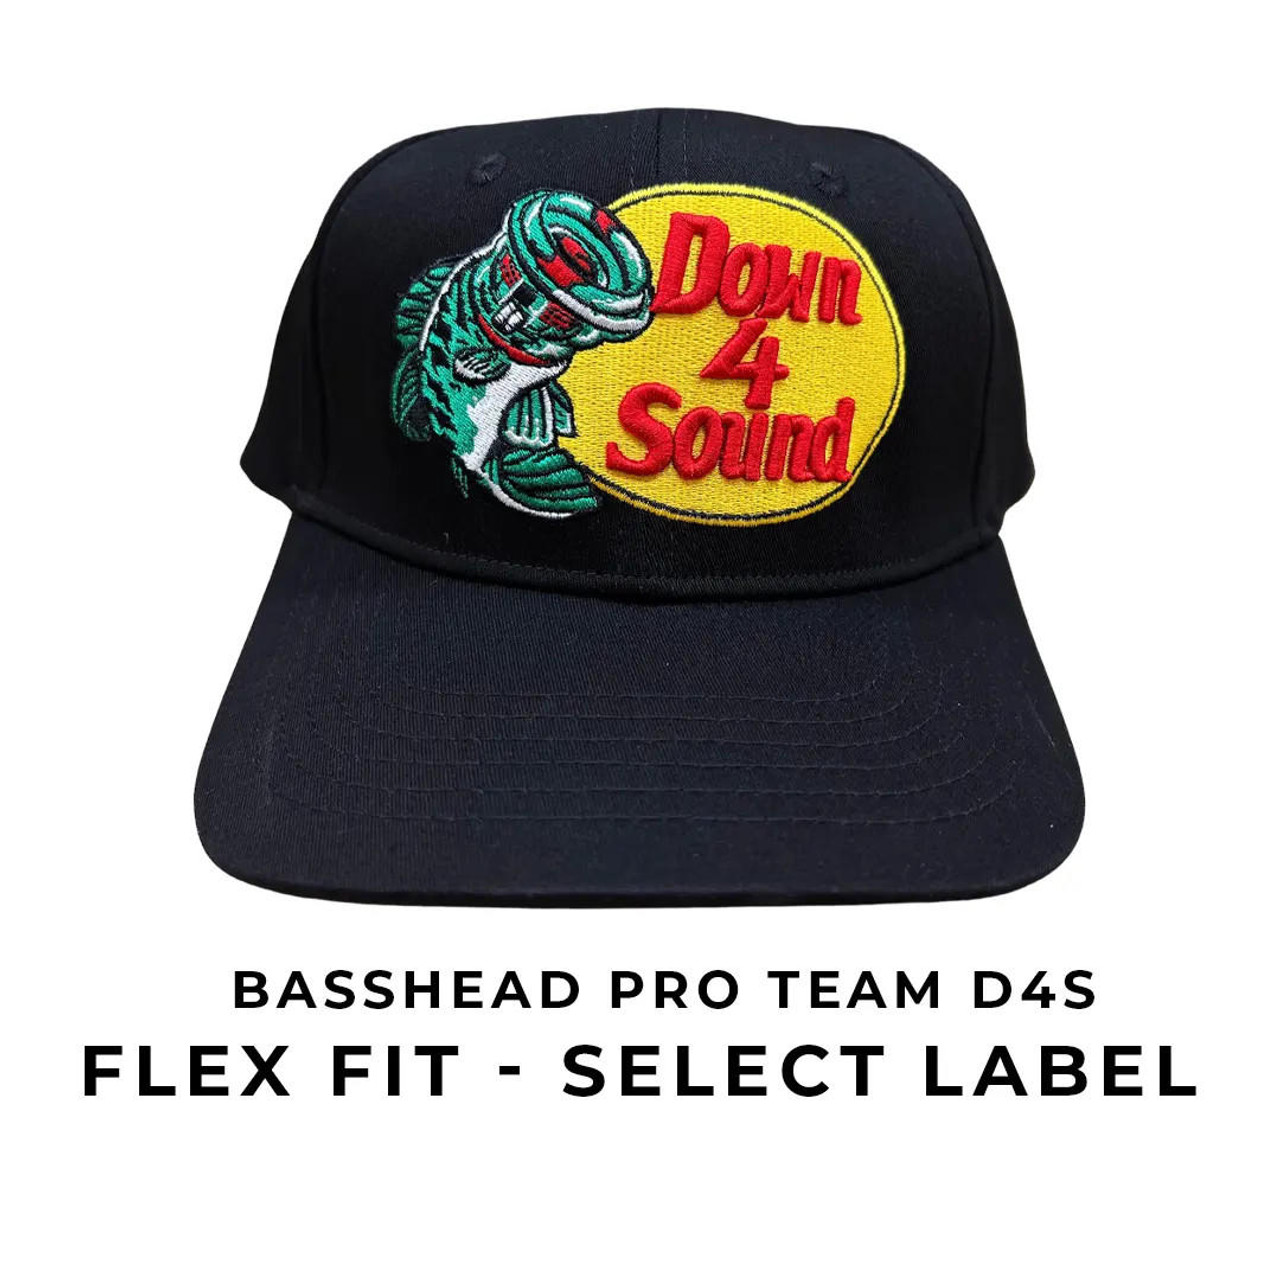 PRO D4S Down4Sound Shop CURVED FLEX TEAM BILL FIT Label - Hat BASSHEAD Select